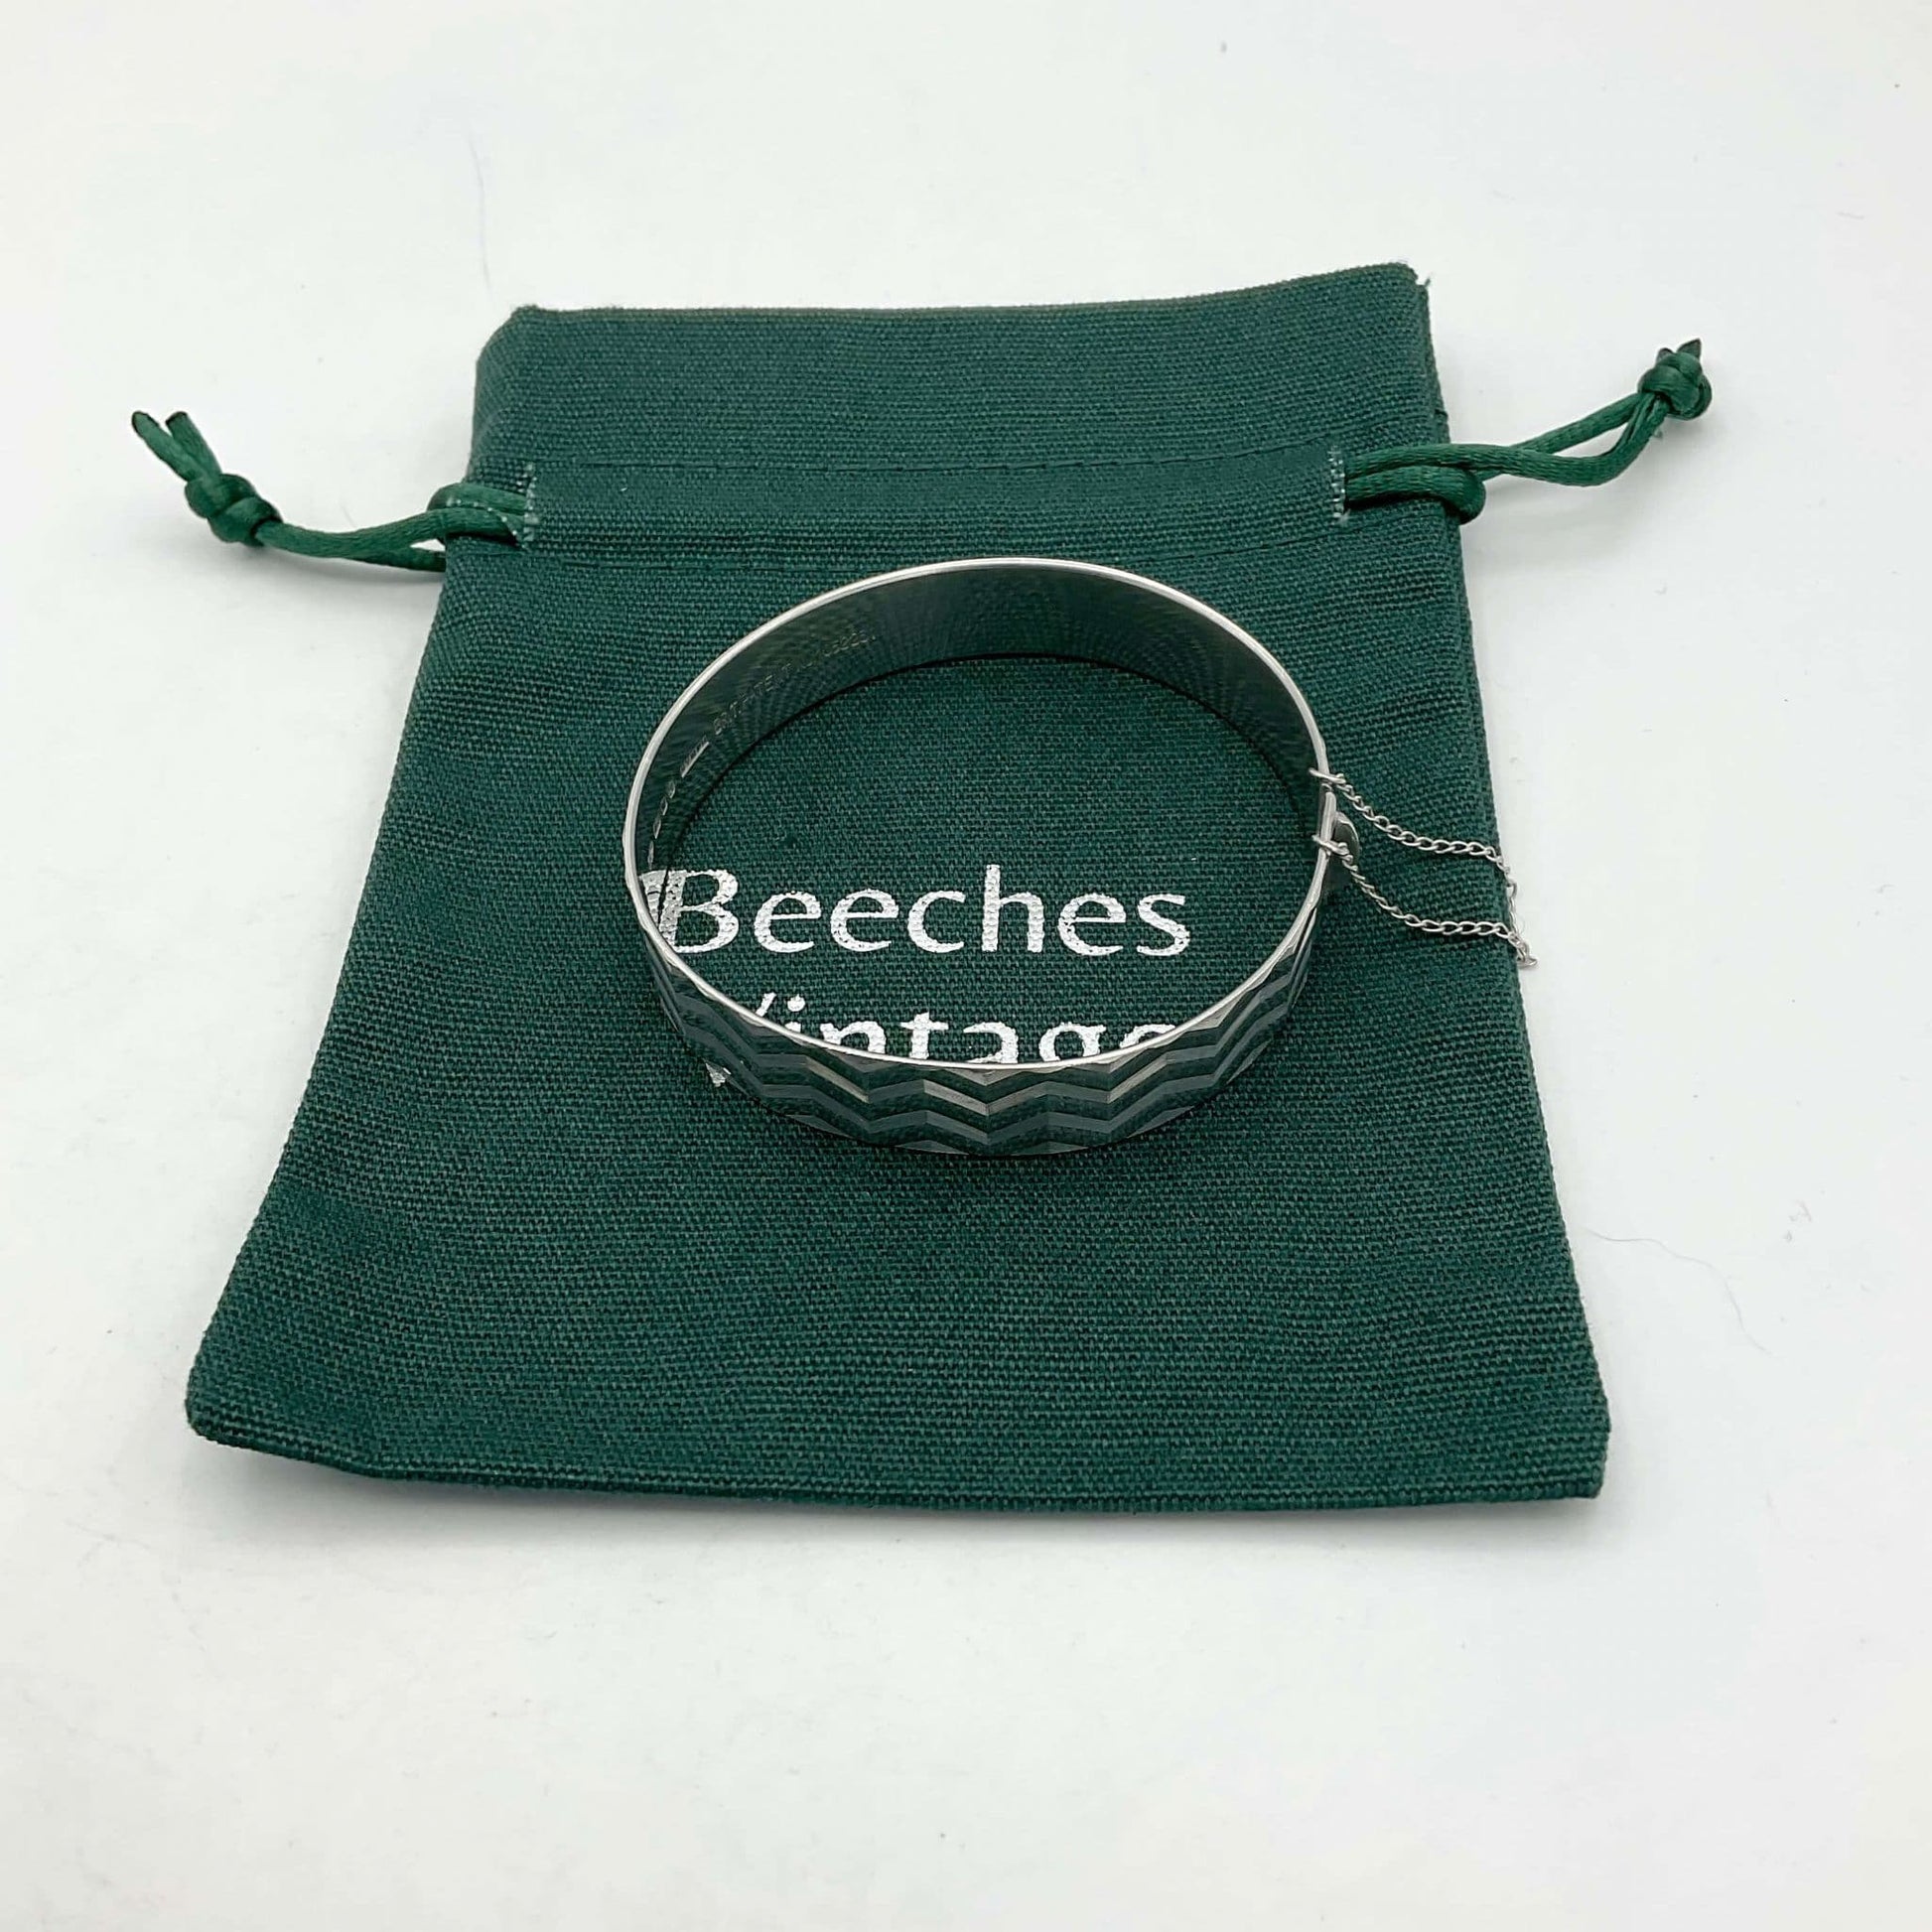 Bracelet with zig zag design on green gift bag